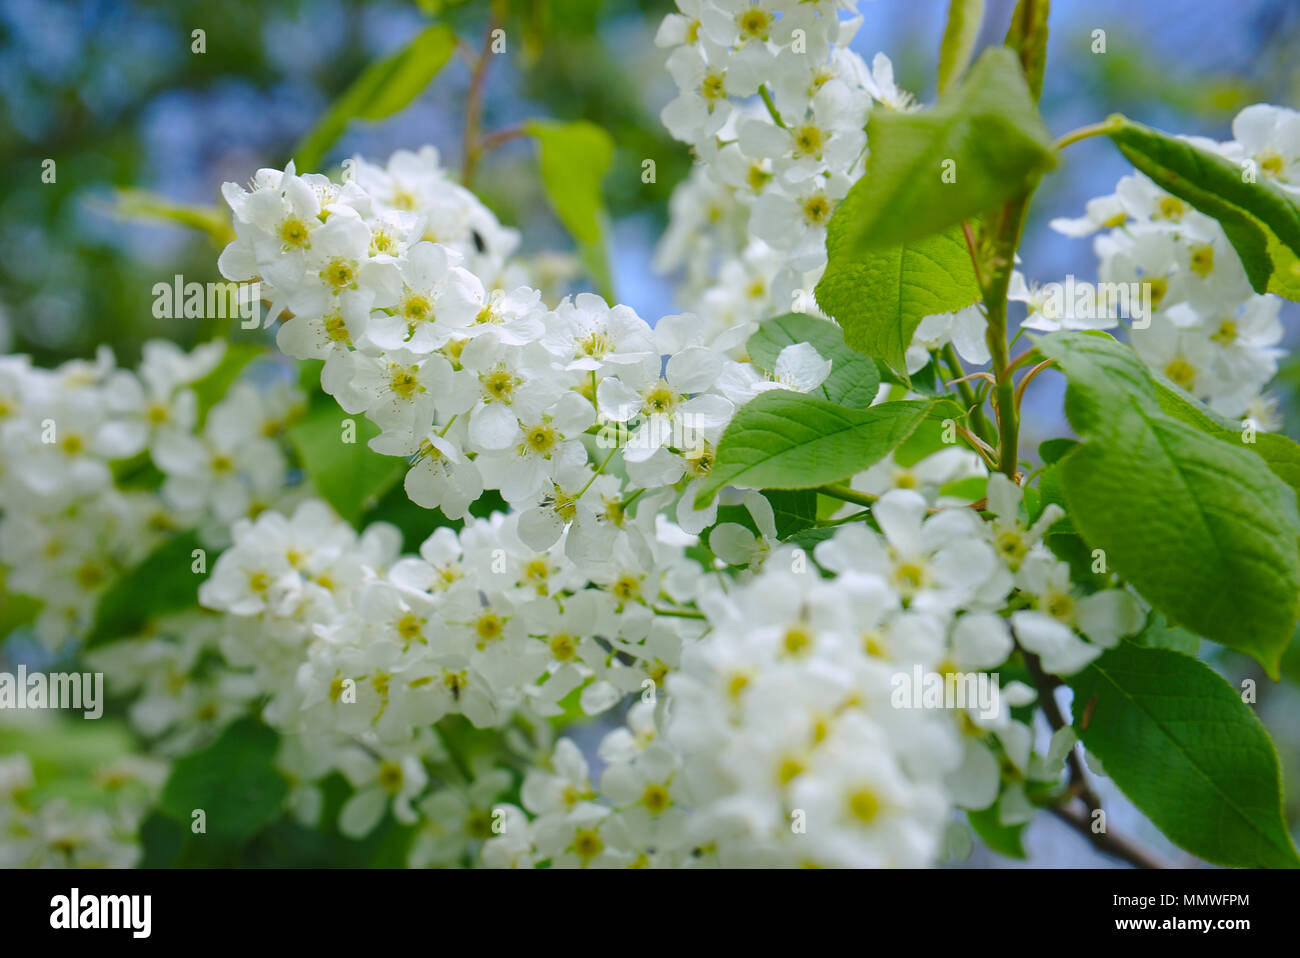 white flowers of jasmine on branch in close-up, (Jasminum) Stock Photo